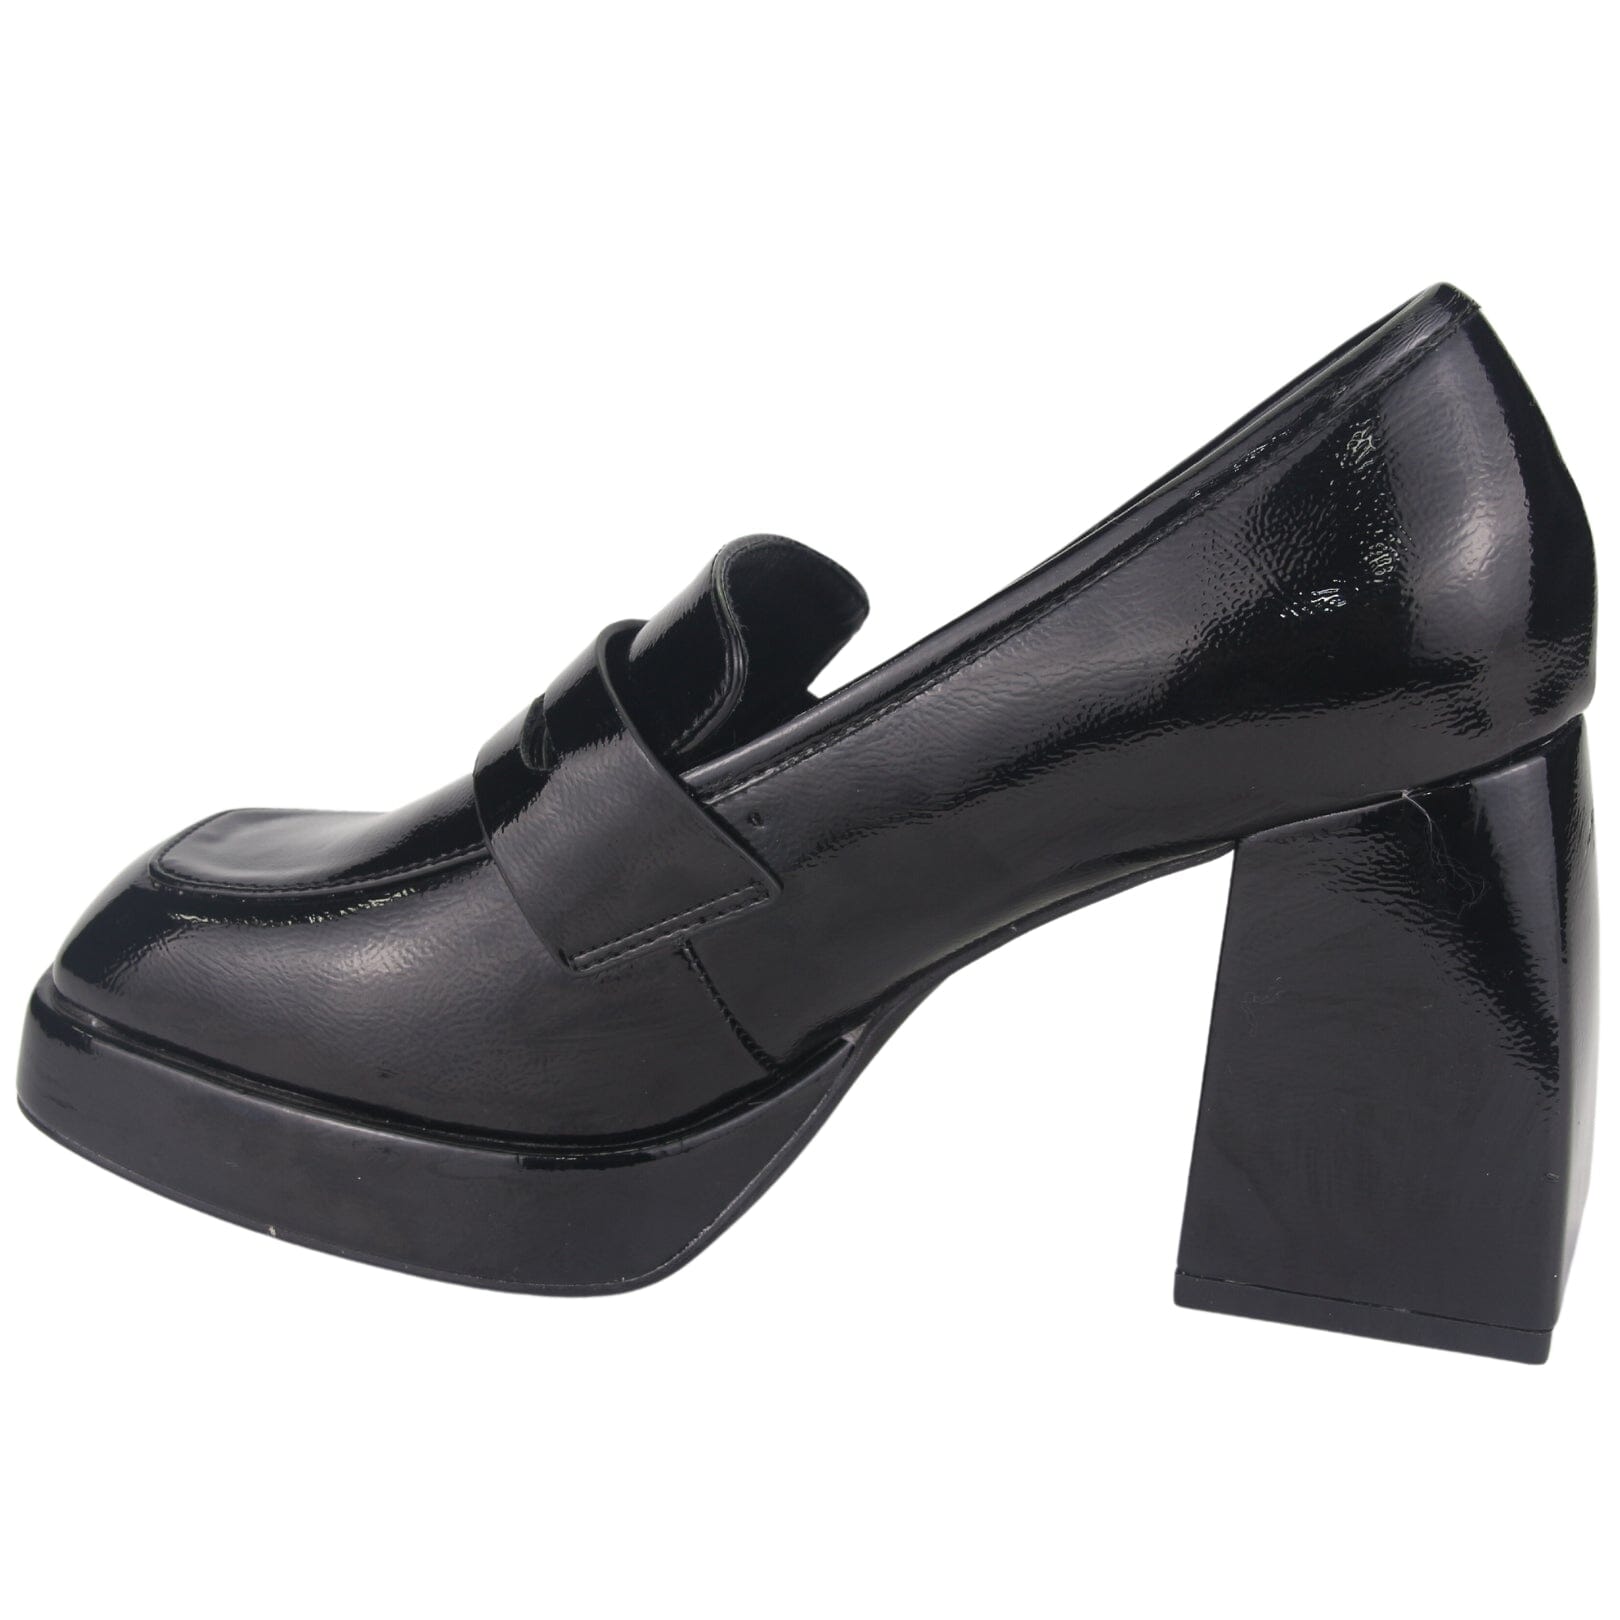 Zapato Chalada Mujer Dune-2 V Negro Casual Tacones Altos Chalada 